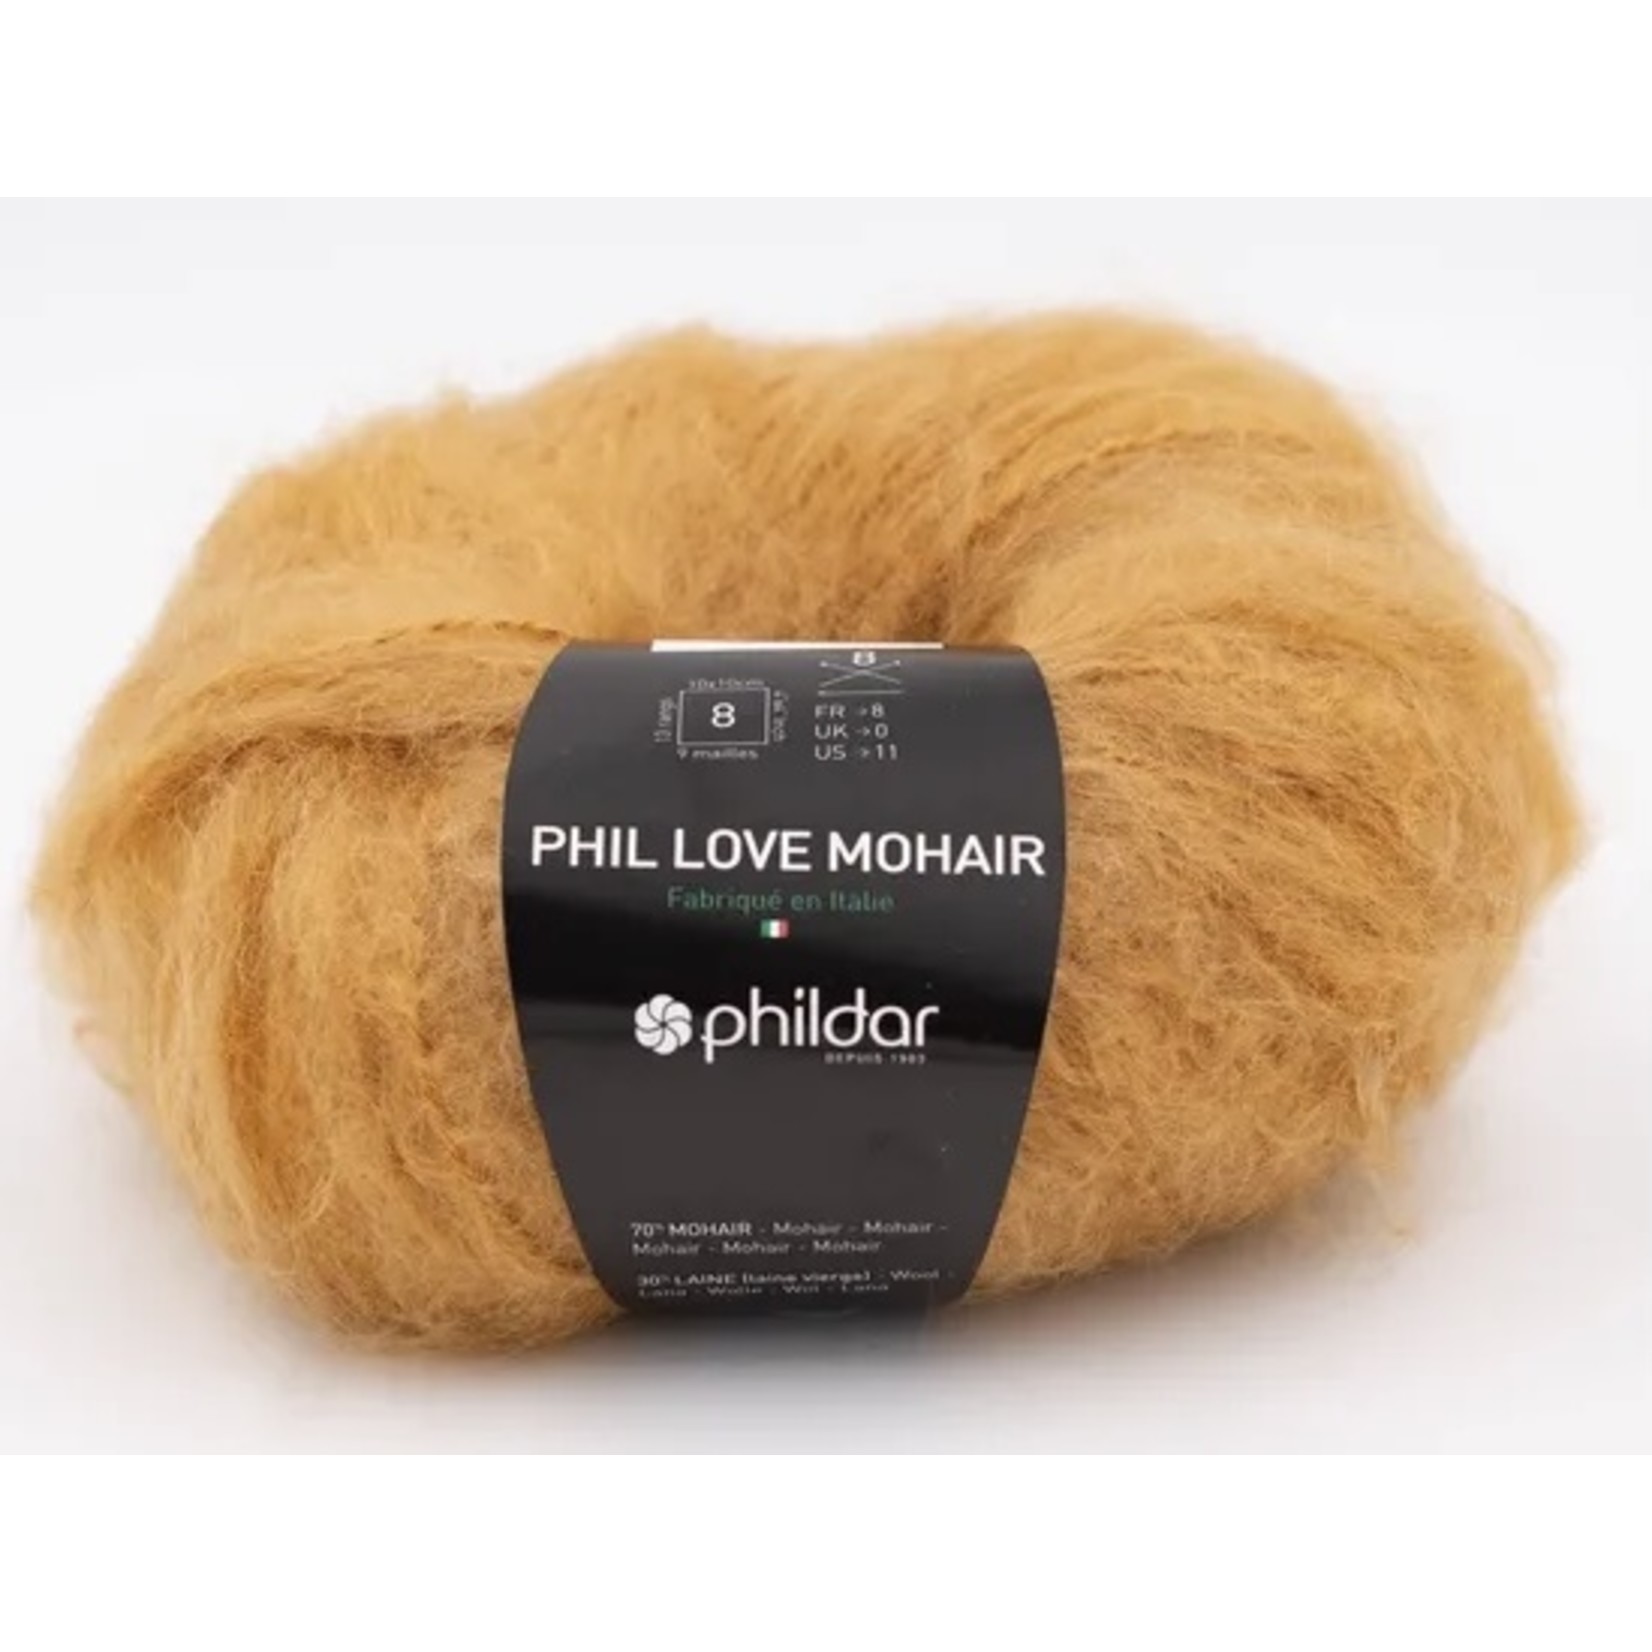 Phildar Phil Love Mohair Miel